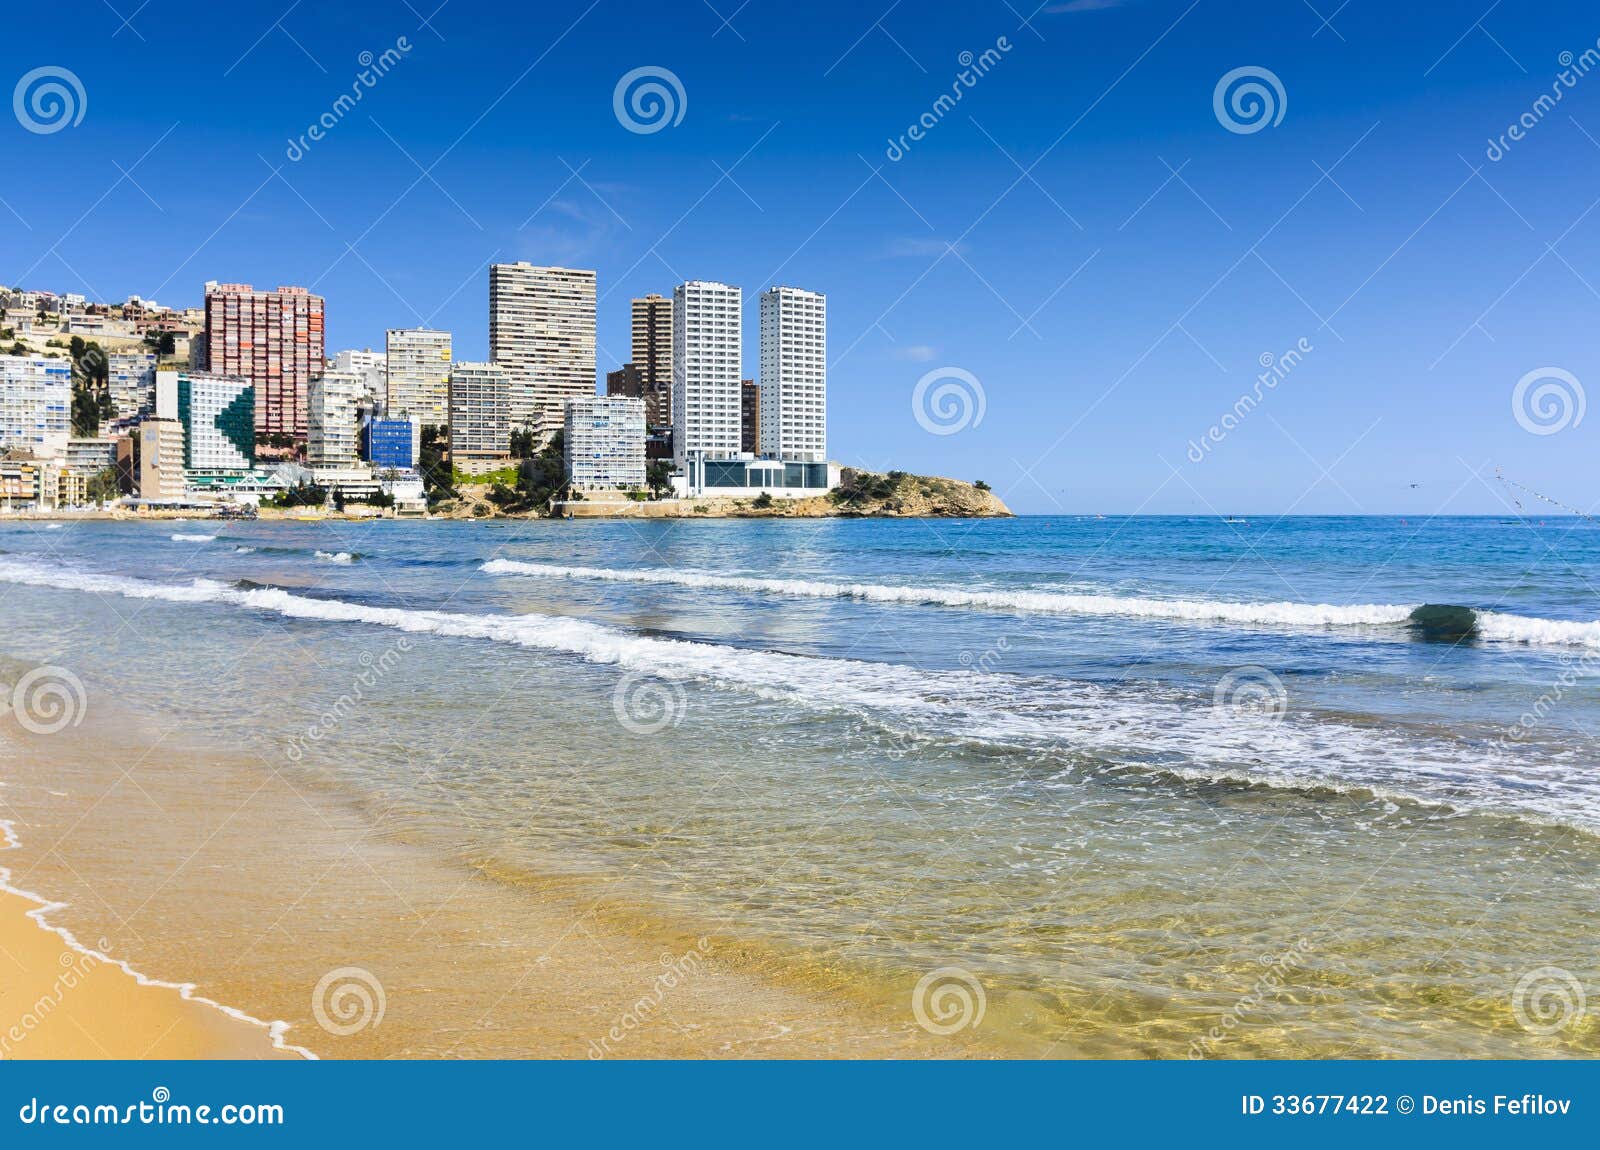 benidorm seashore on levante beach, spain